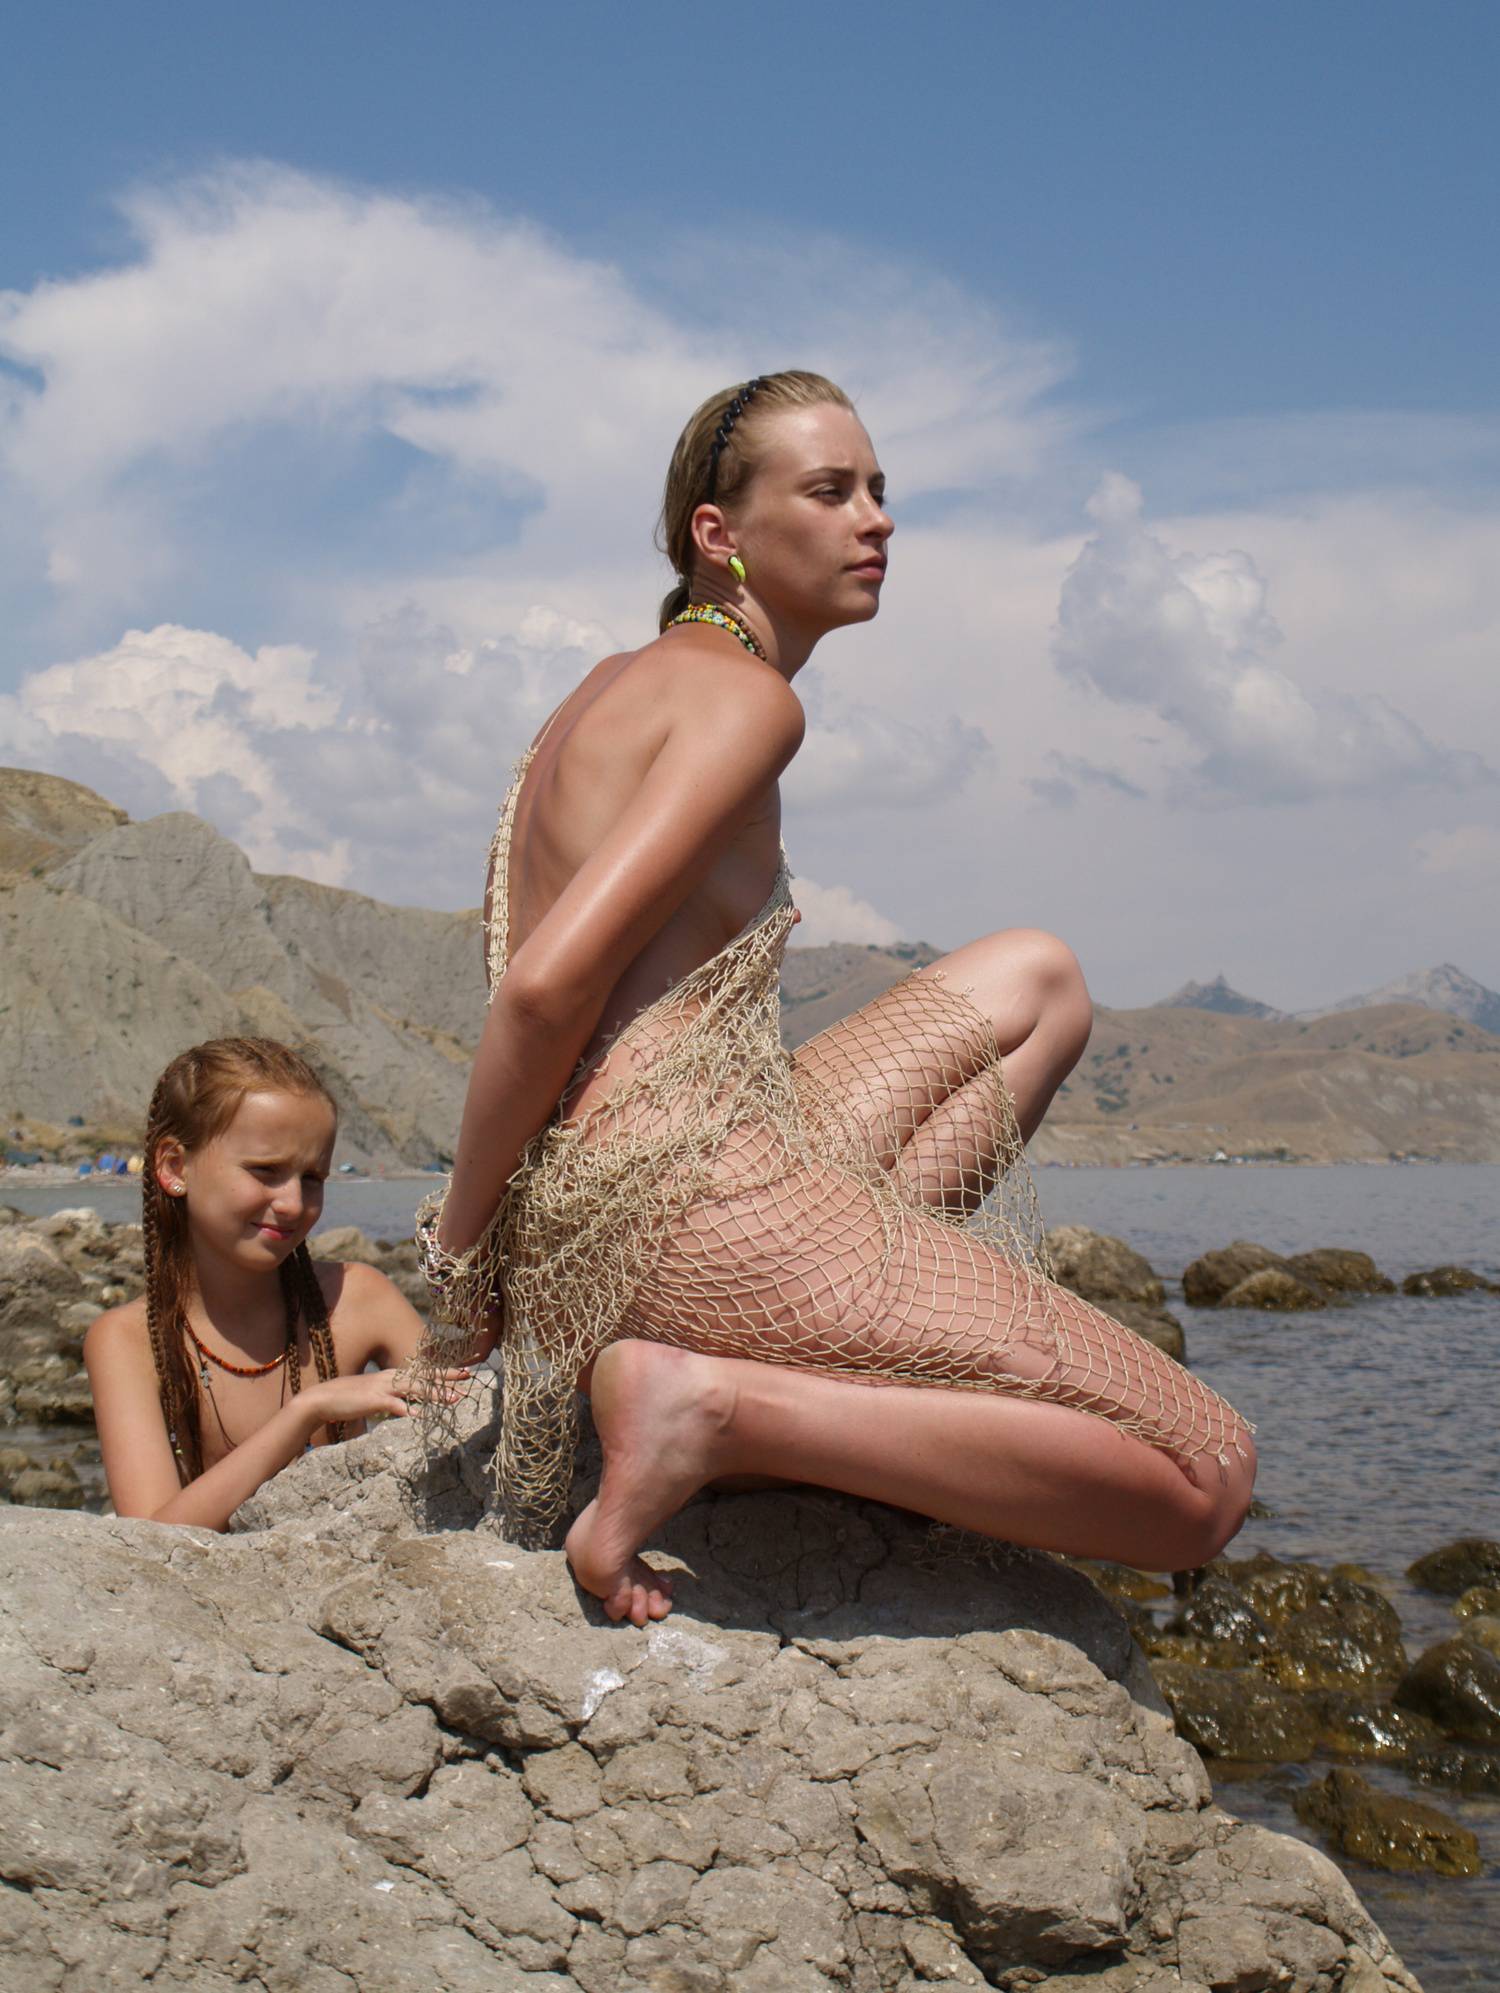 Nudist Photos Naturist Model and Daughter - 1